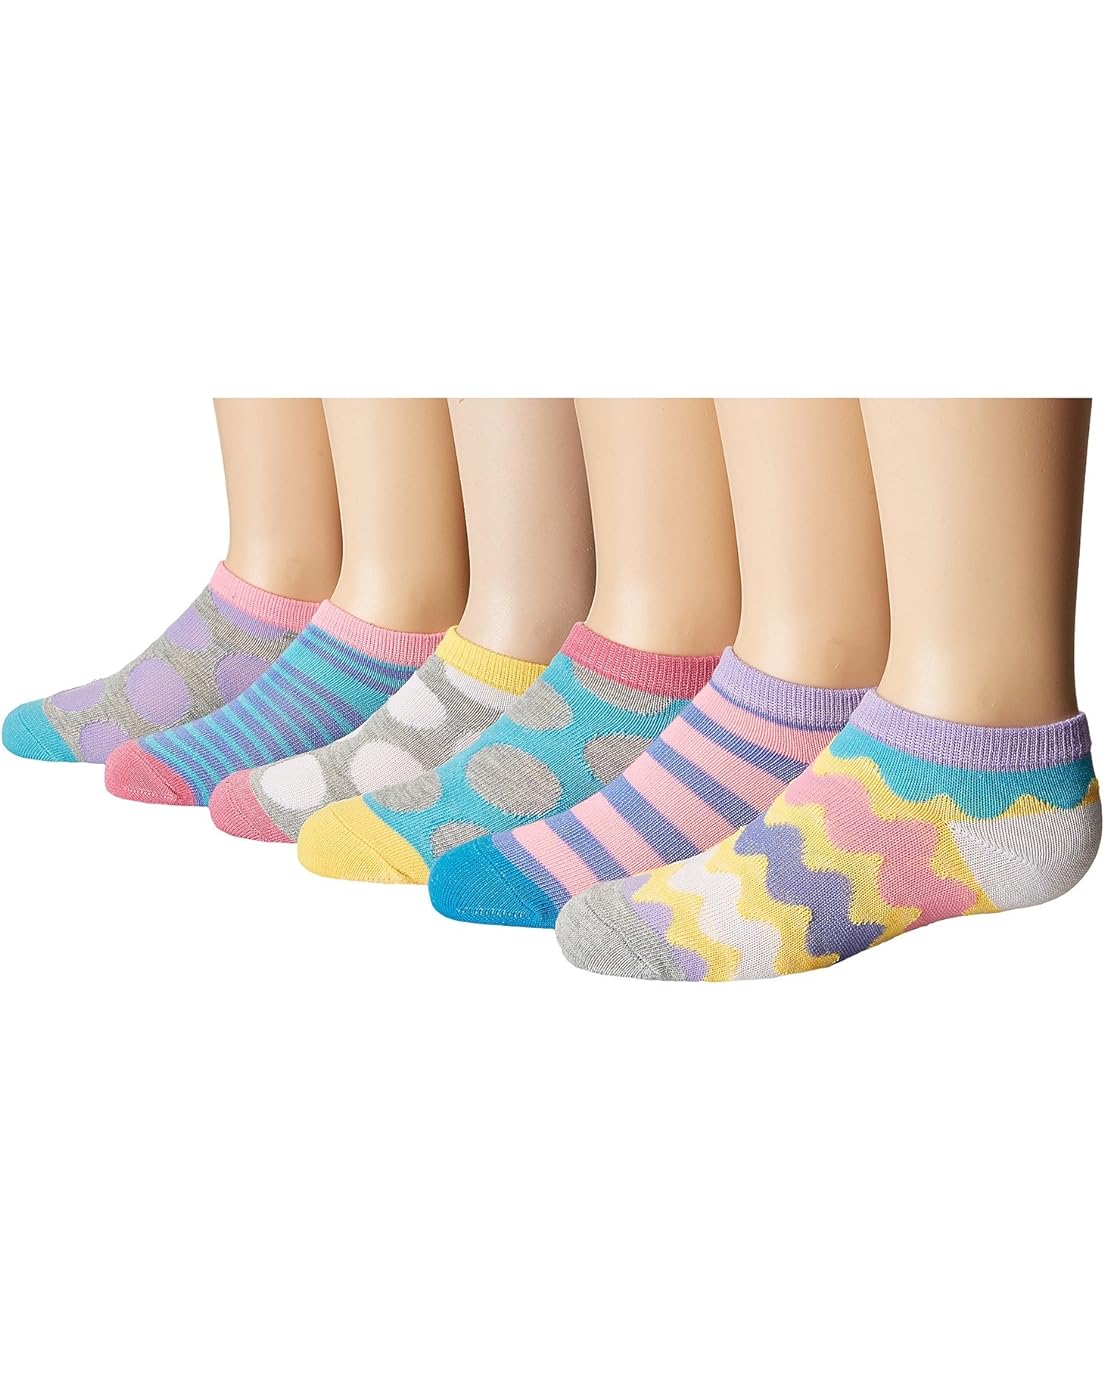 Jefferies Socks Dots/Stripes Low Cut 6-Pack (Toddler/Little Kid/Big Kid)